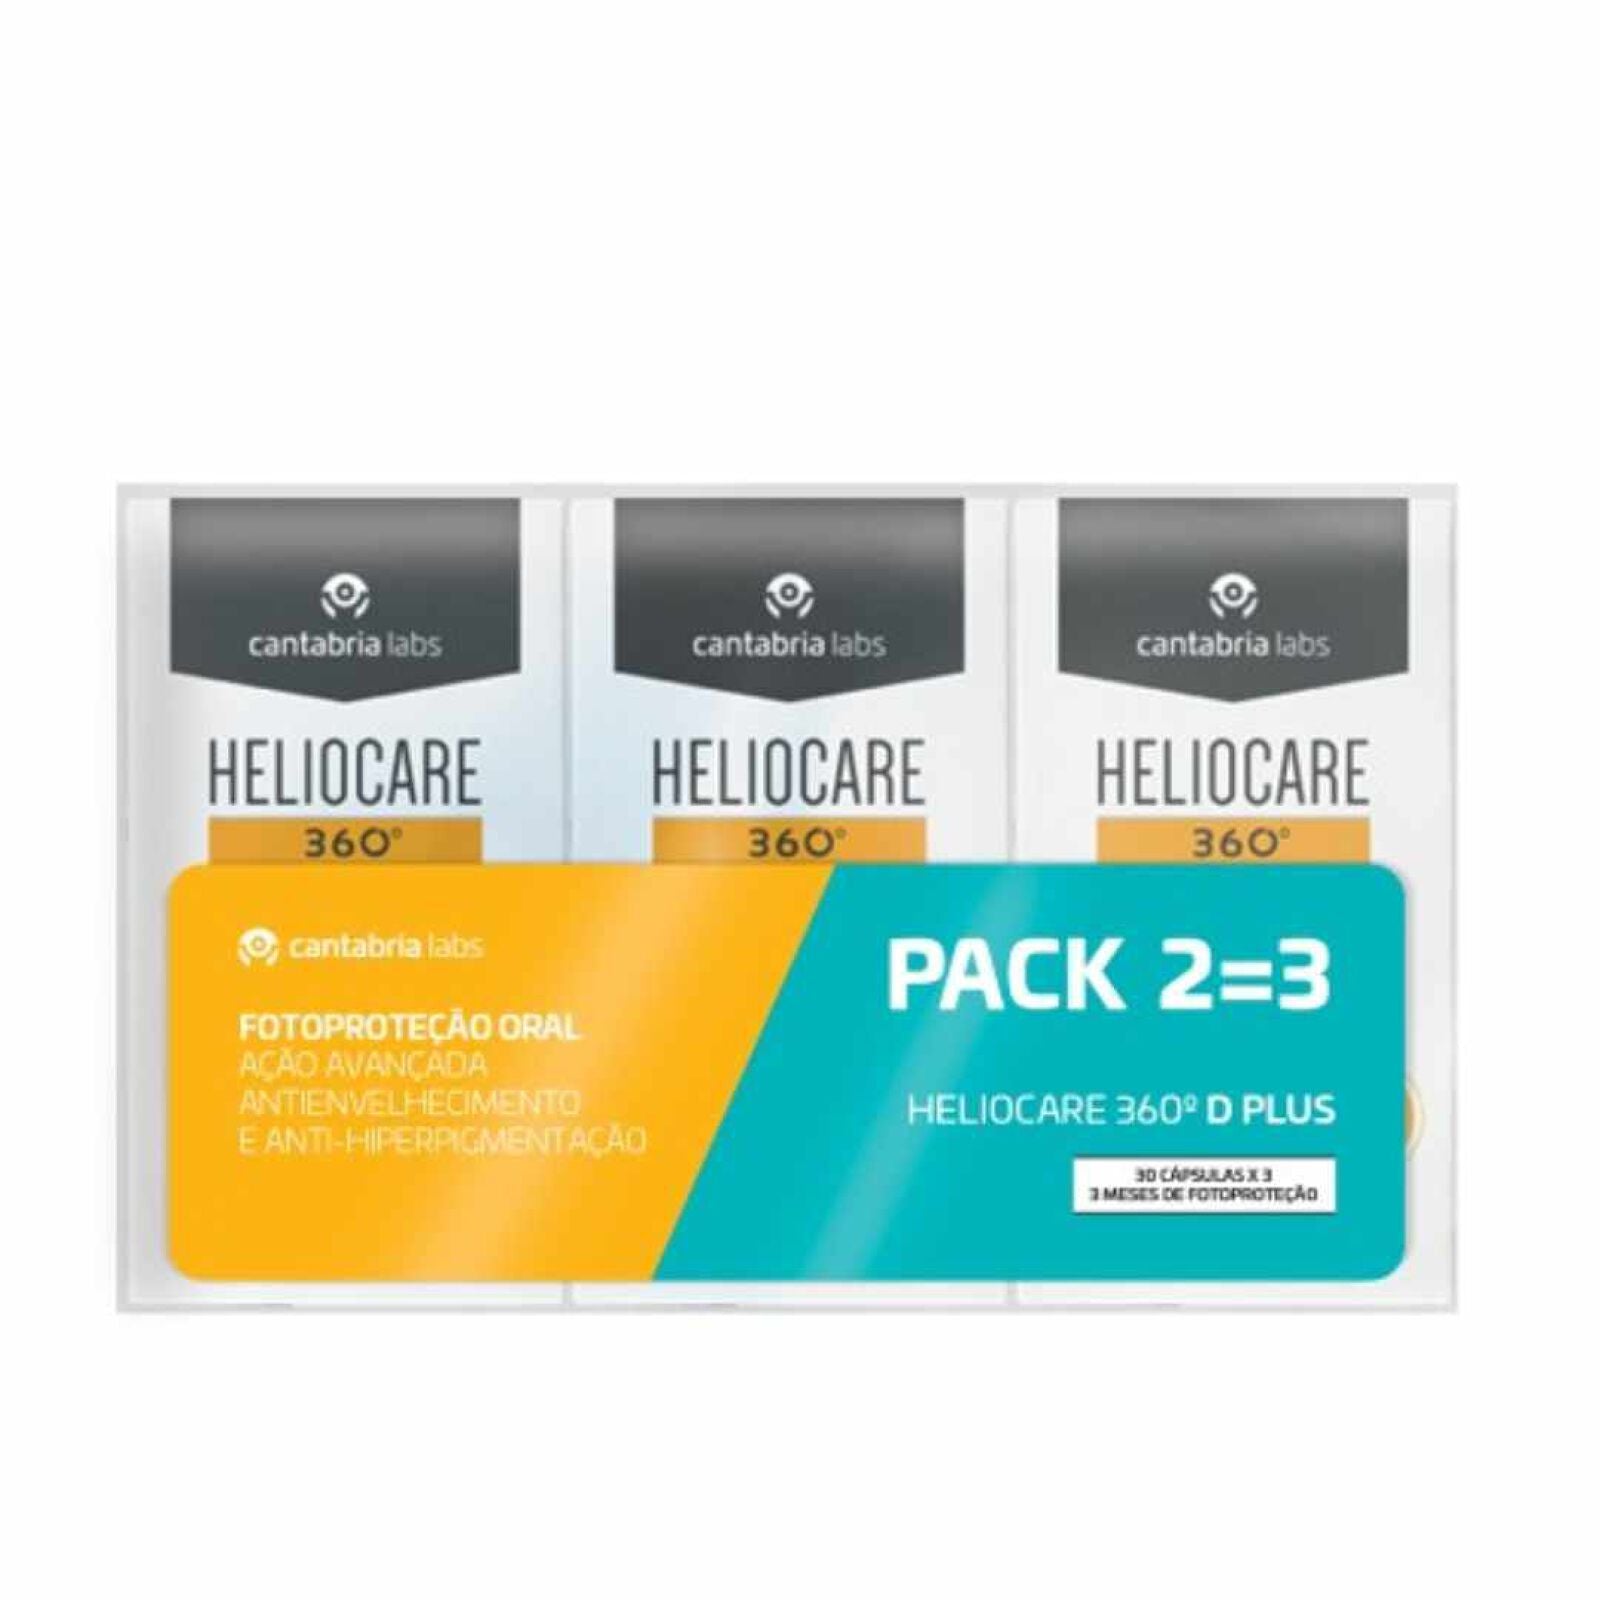 Heliocare Promo Pack: Heliocare 360º D Plus 2=3